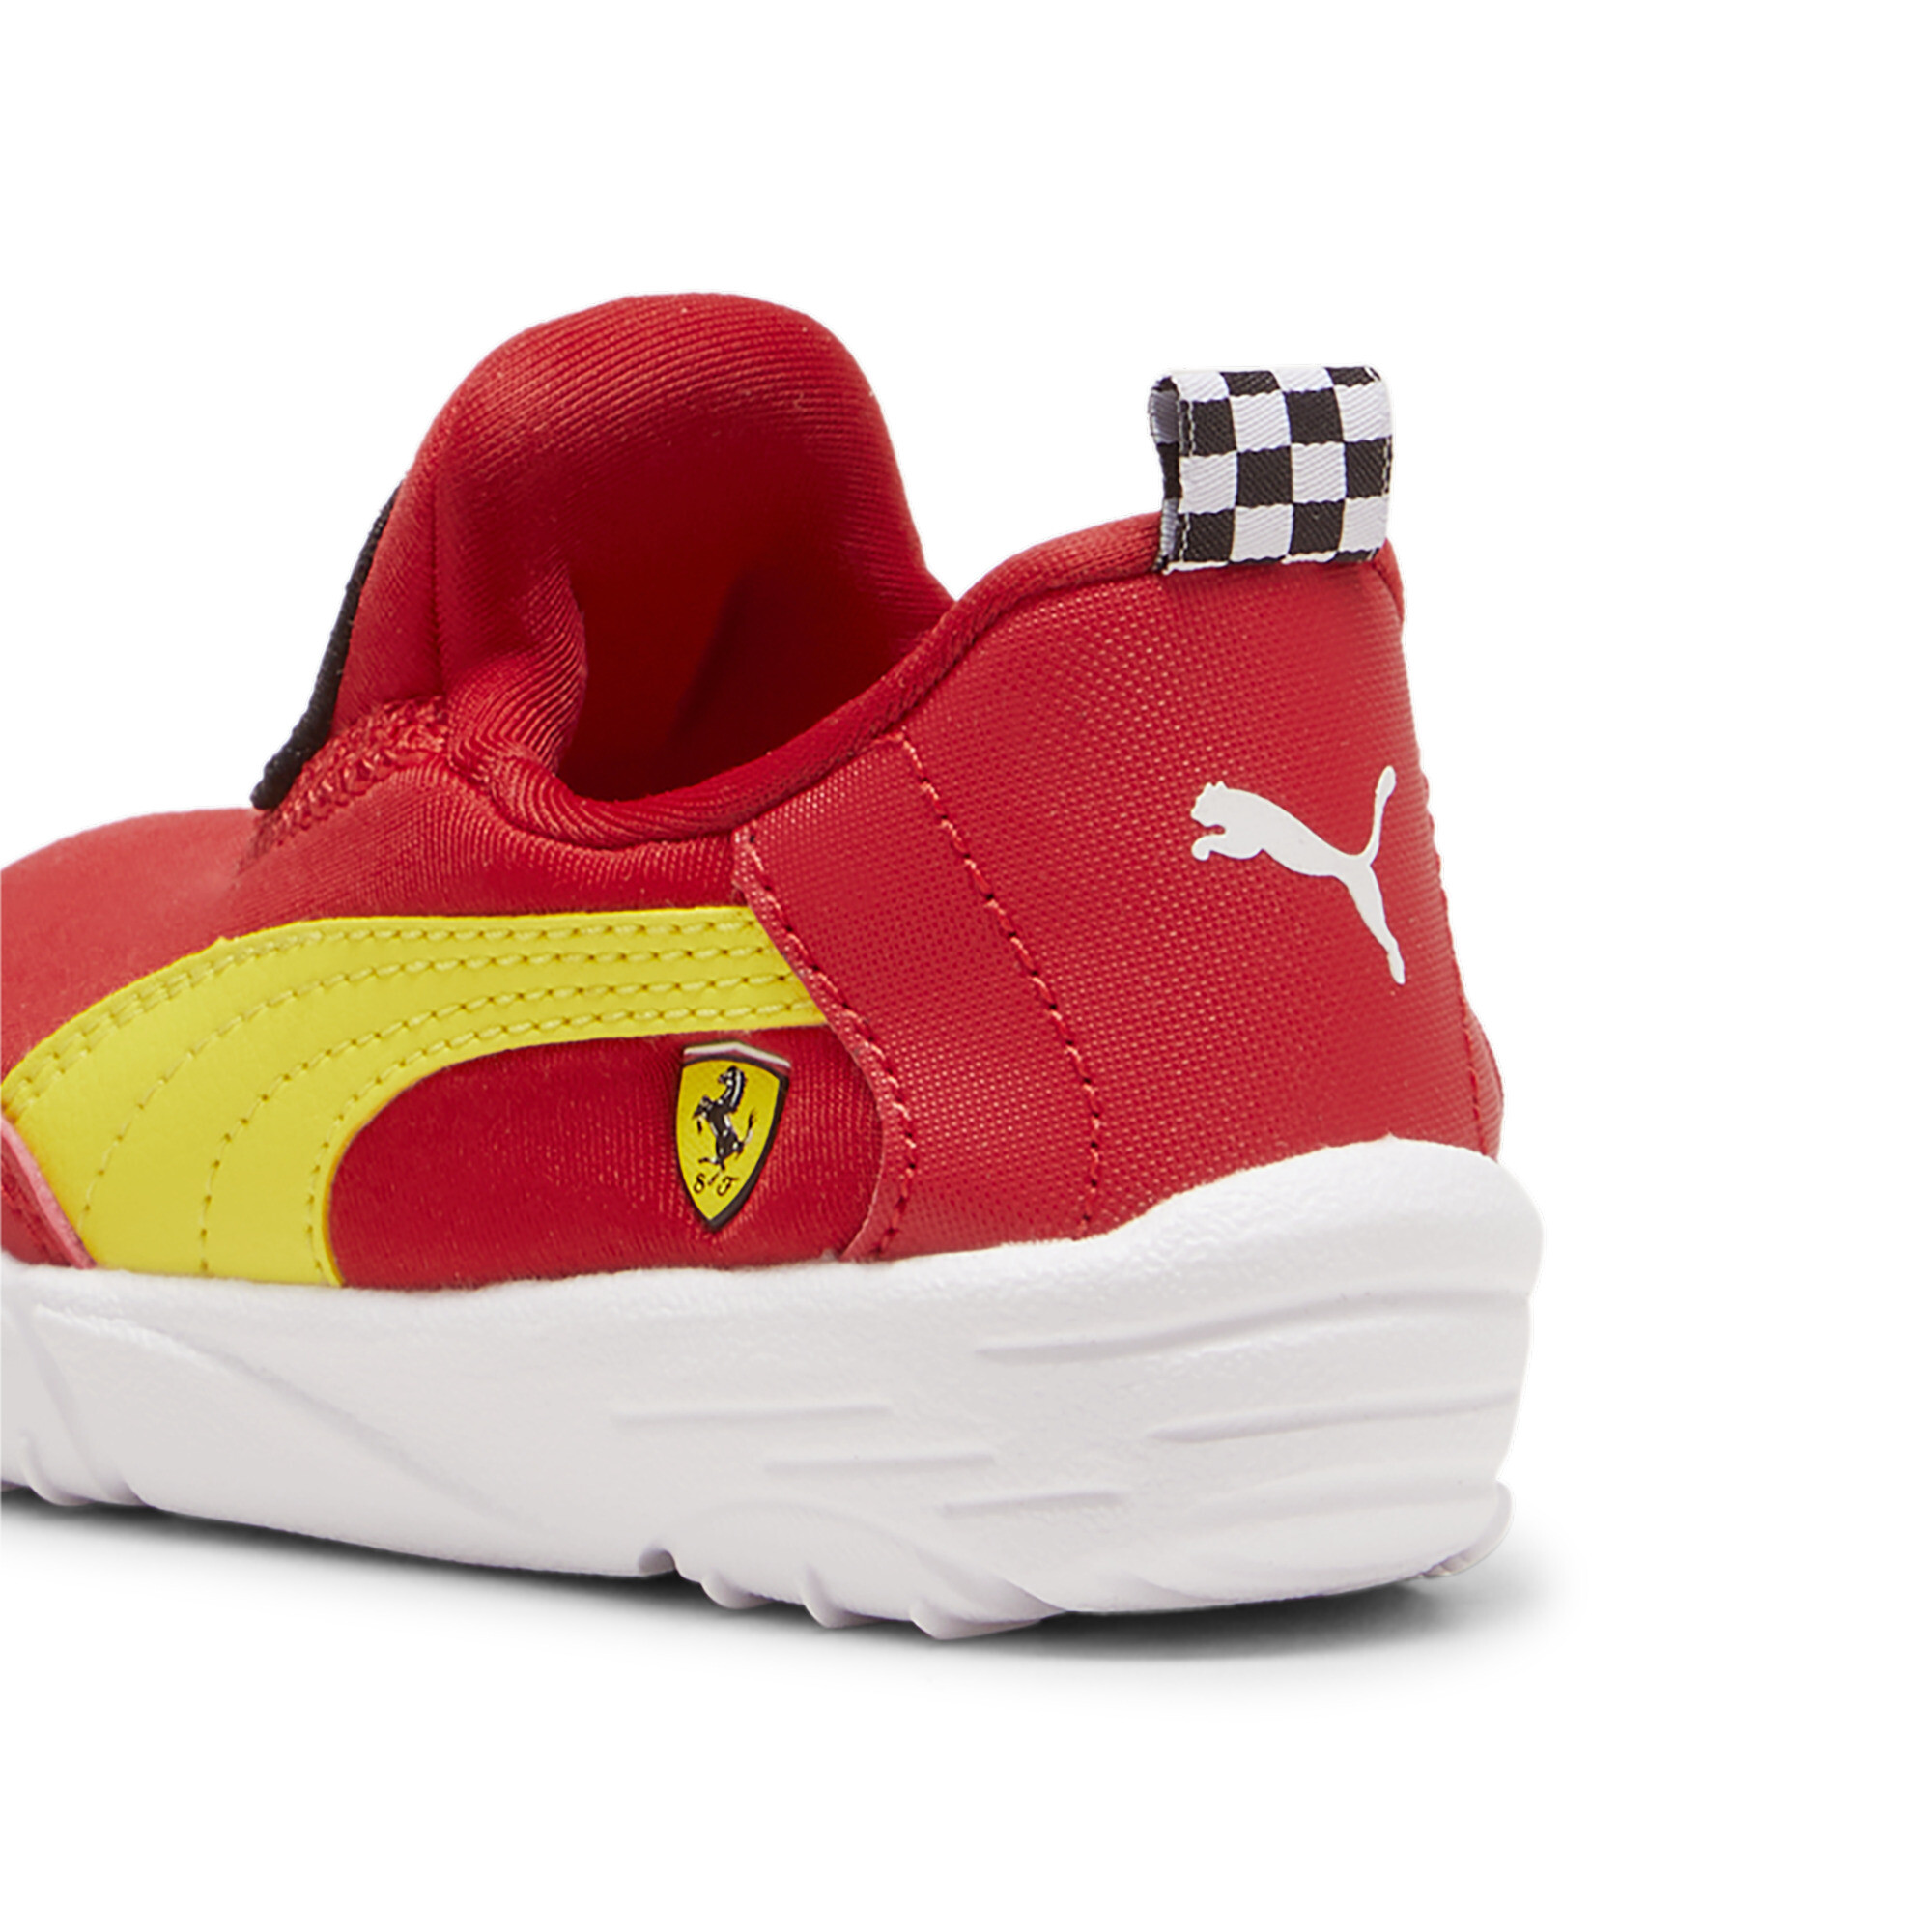 Puma Scuderia Ferrari Bao Kart Toddlers' Motorsport Shoes, Red, Size 19, Shoes